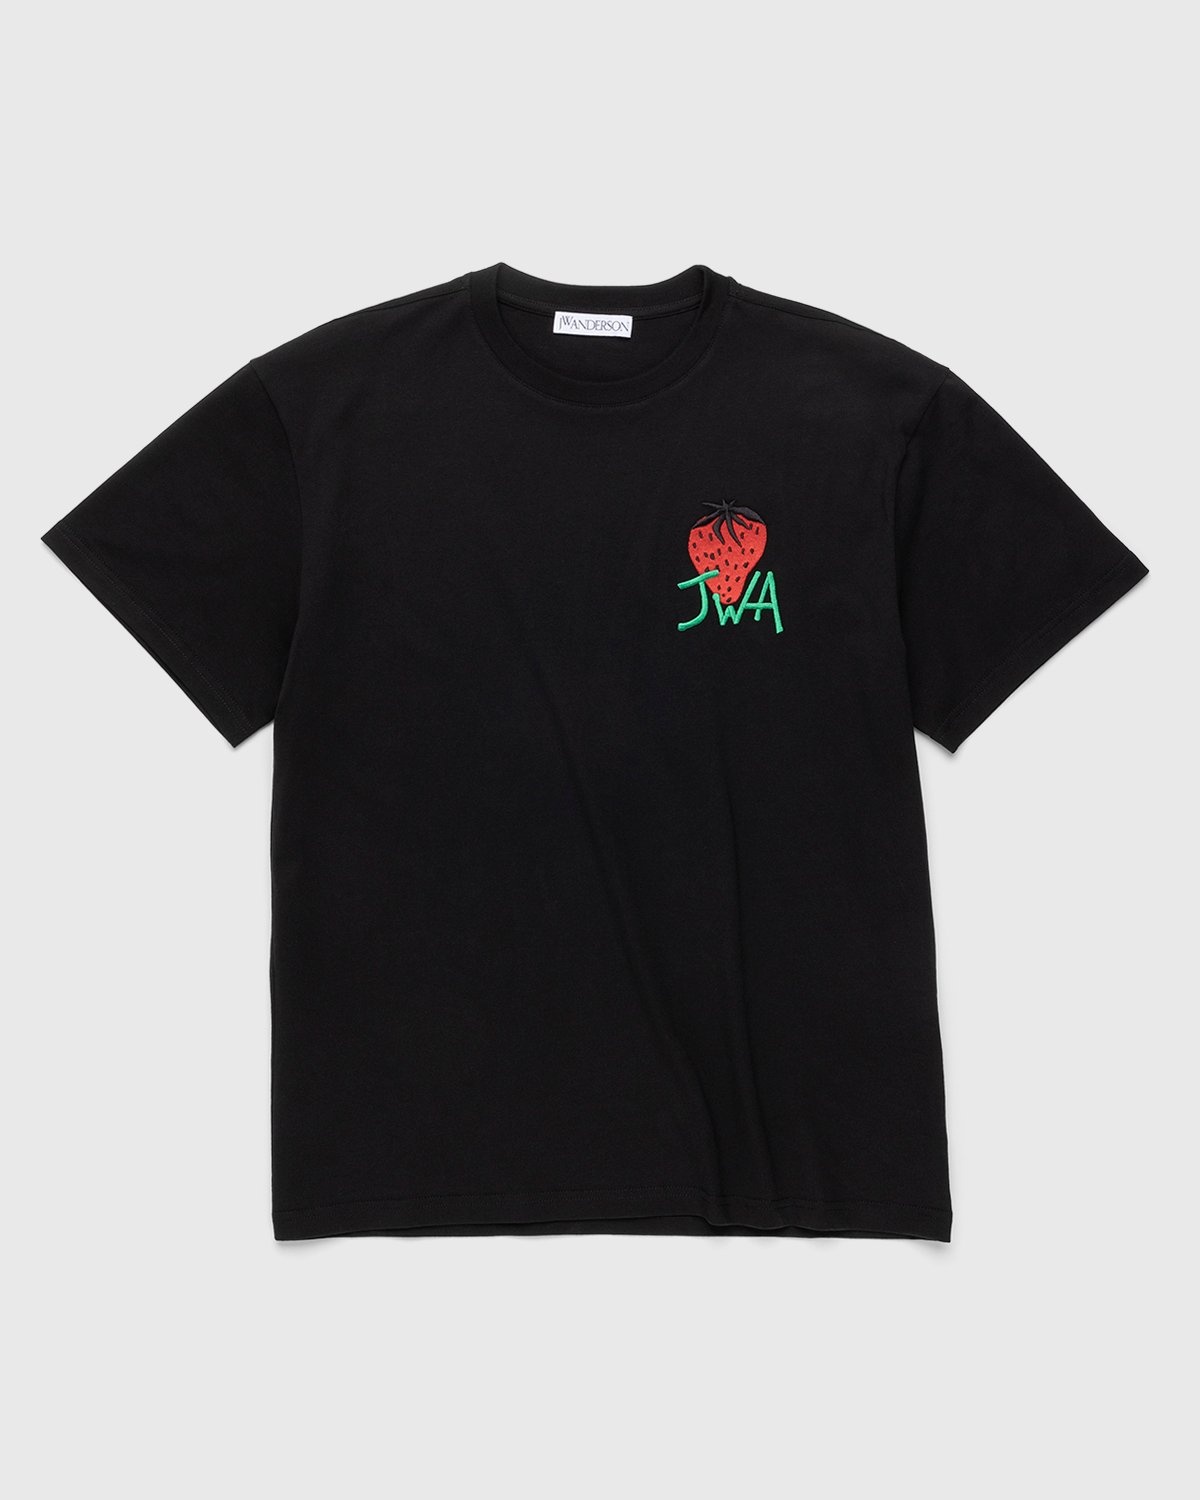 J.W. Anderson – Embroidered Strawberry JWA T-Shirt Black - T-Shirts - Black - Image 1